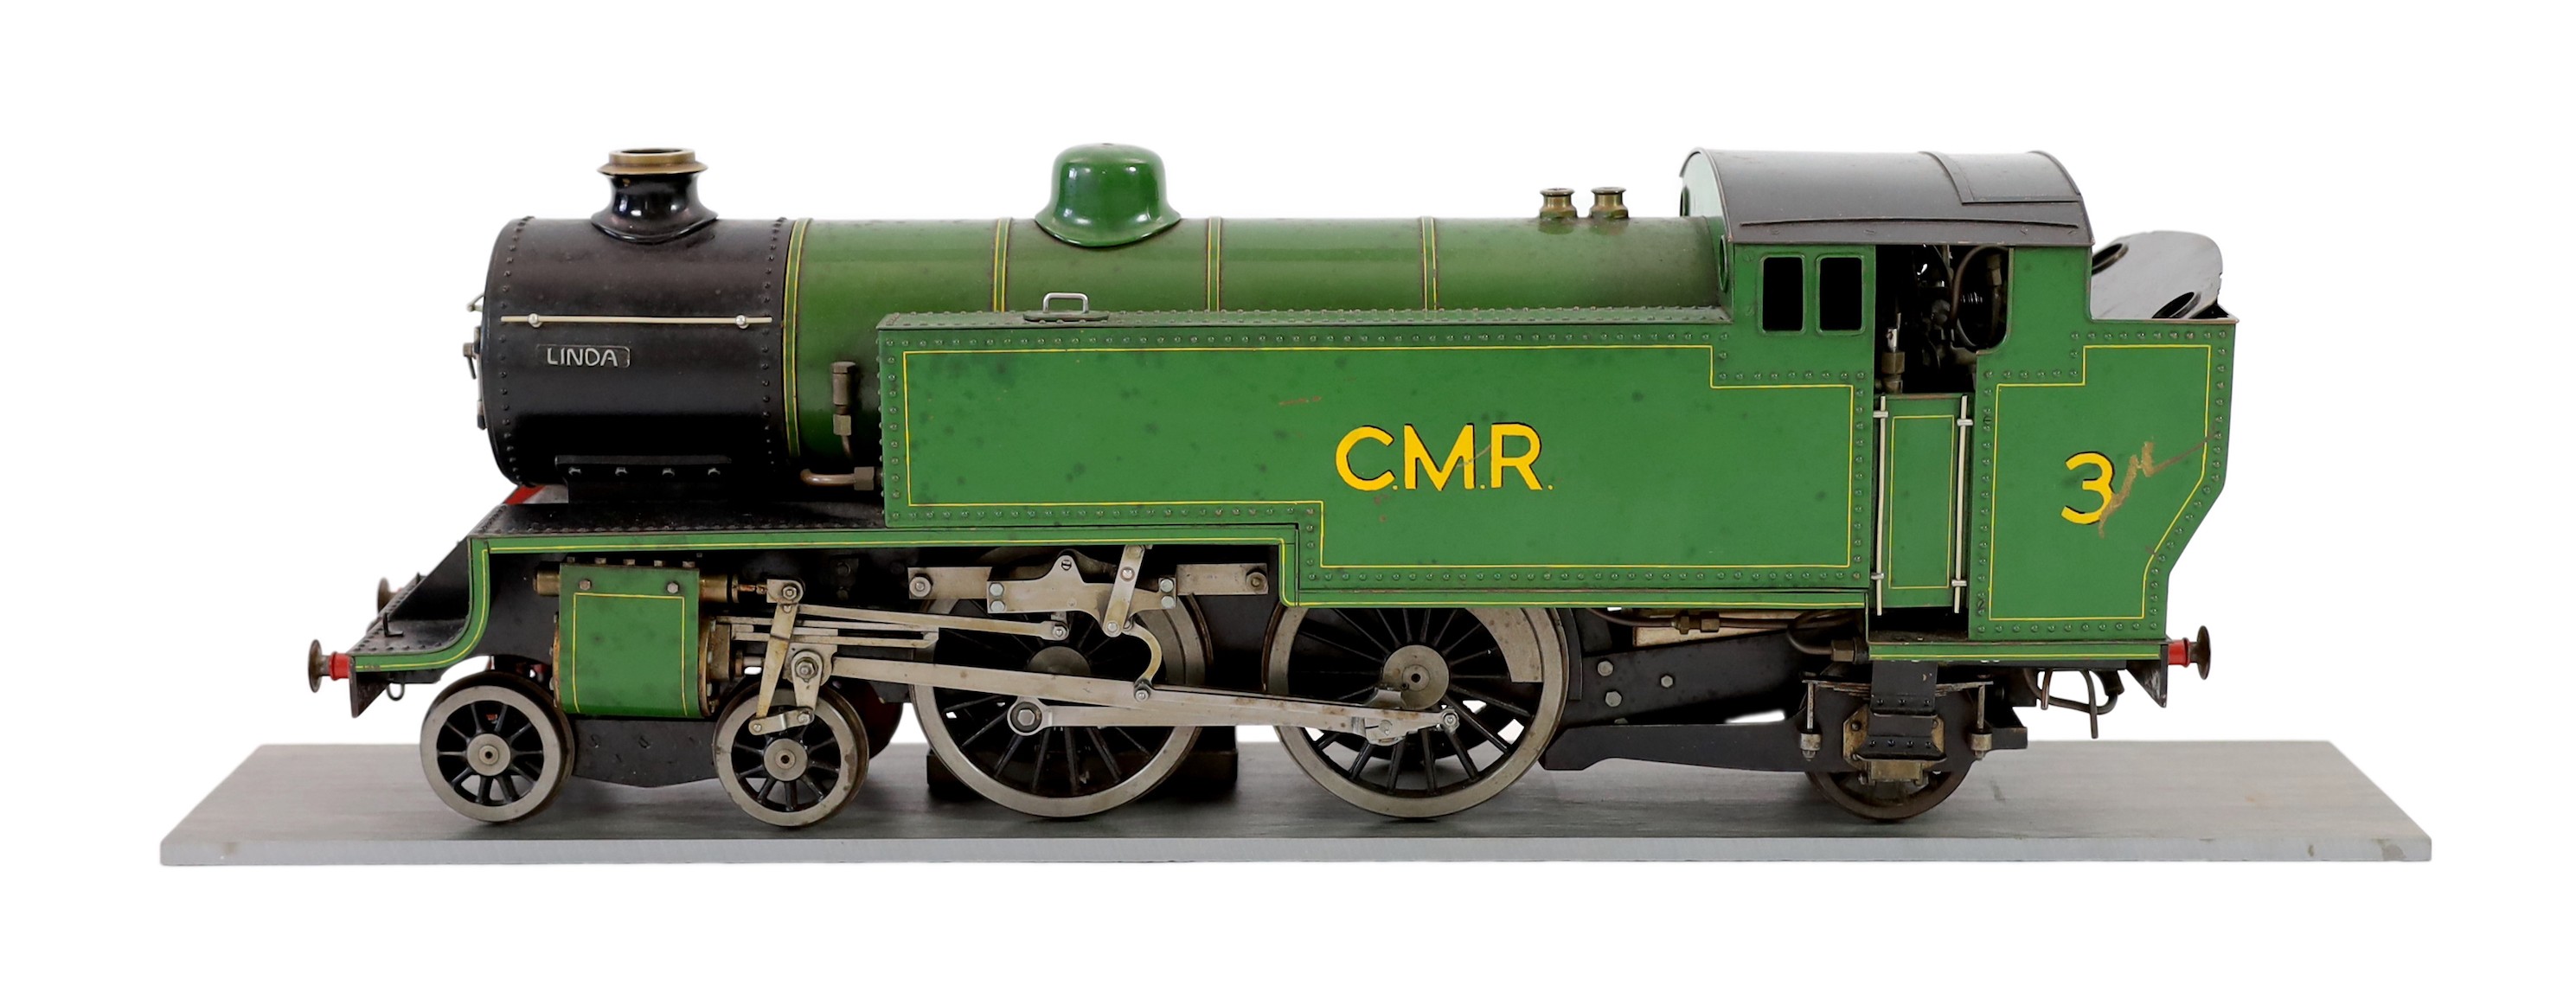 A scratch built live steam model of a C.M.R 2-4-4 tank engine ‘Linda’, length 77cm width 20cm height 27cm